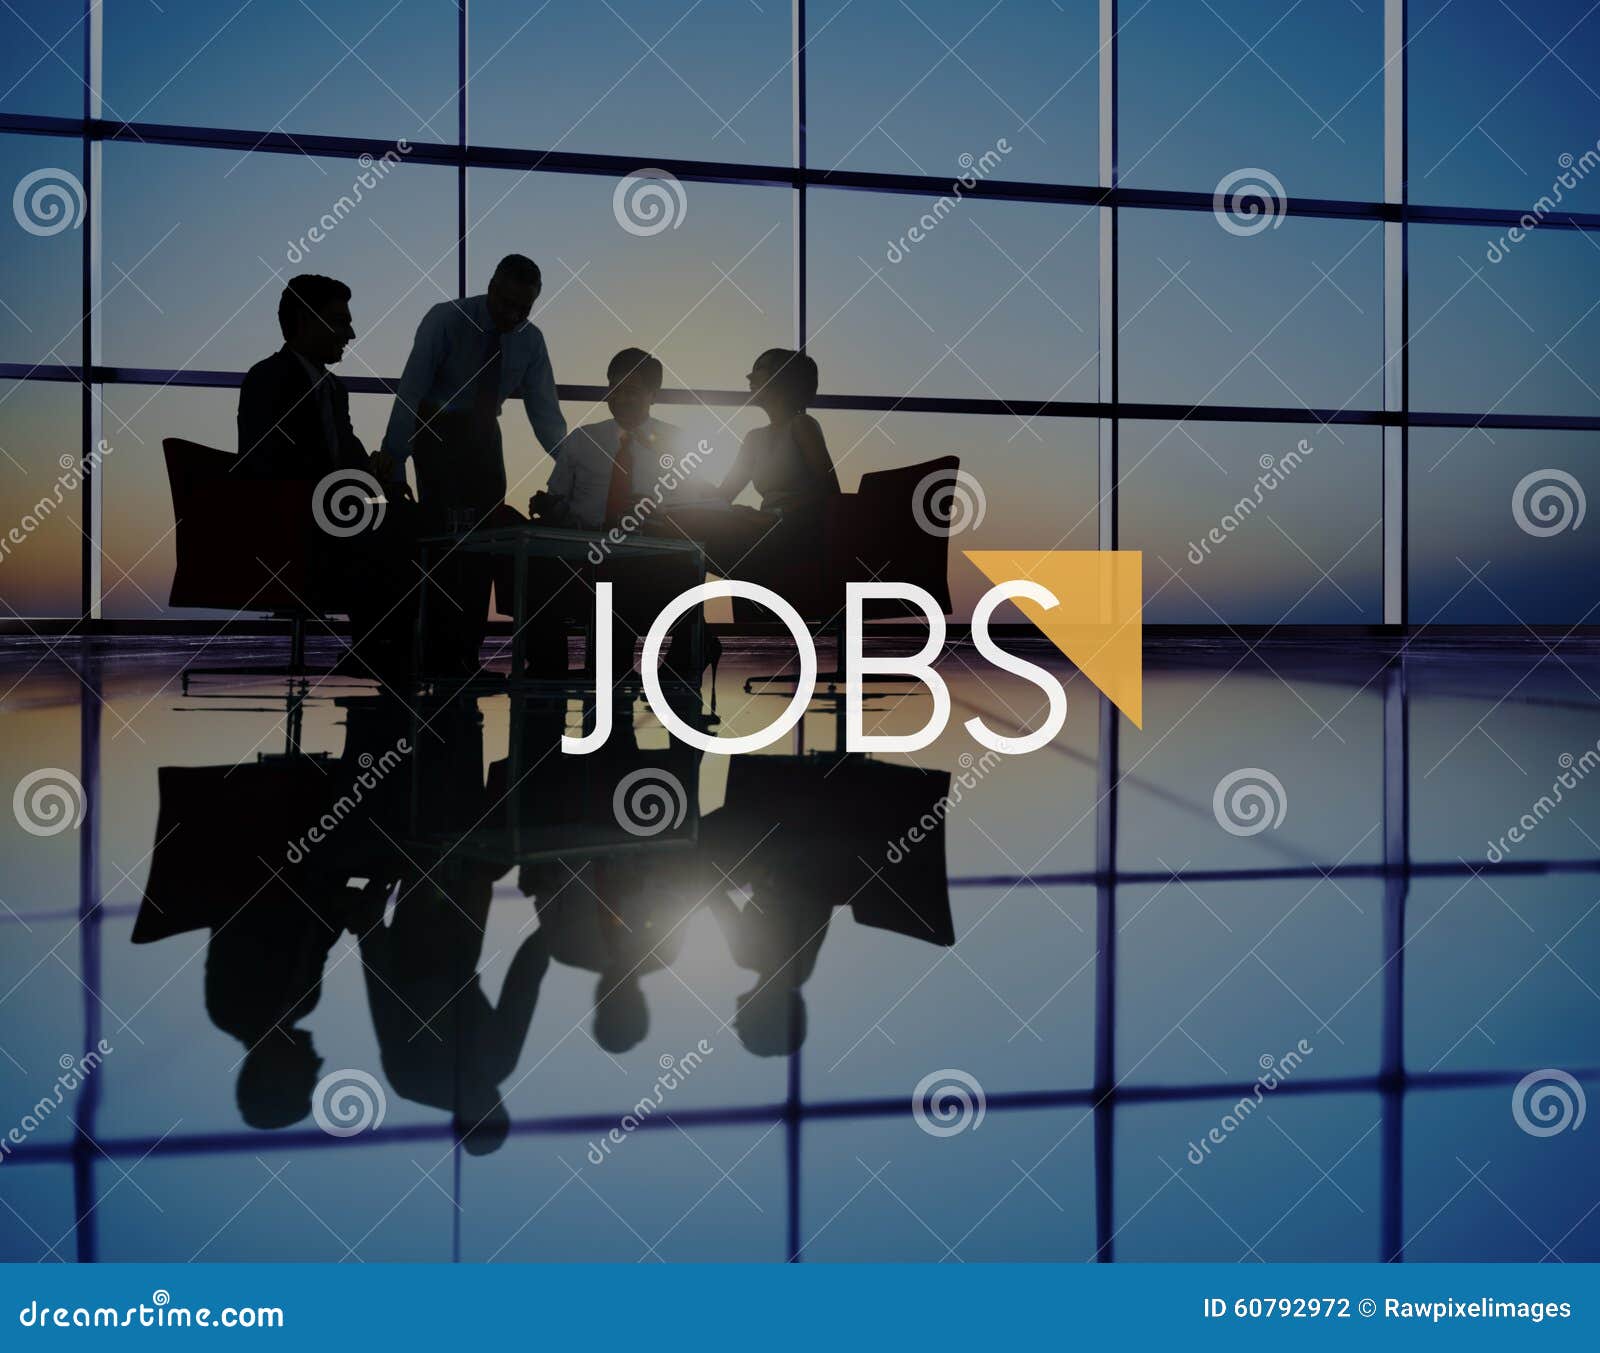 jobs job career occupation human resource recruitment concept